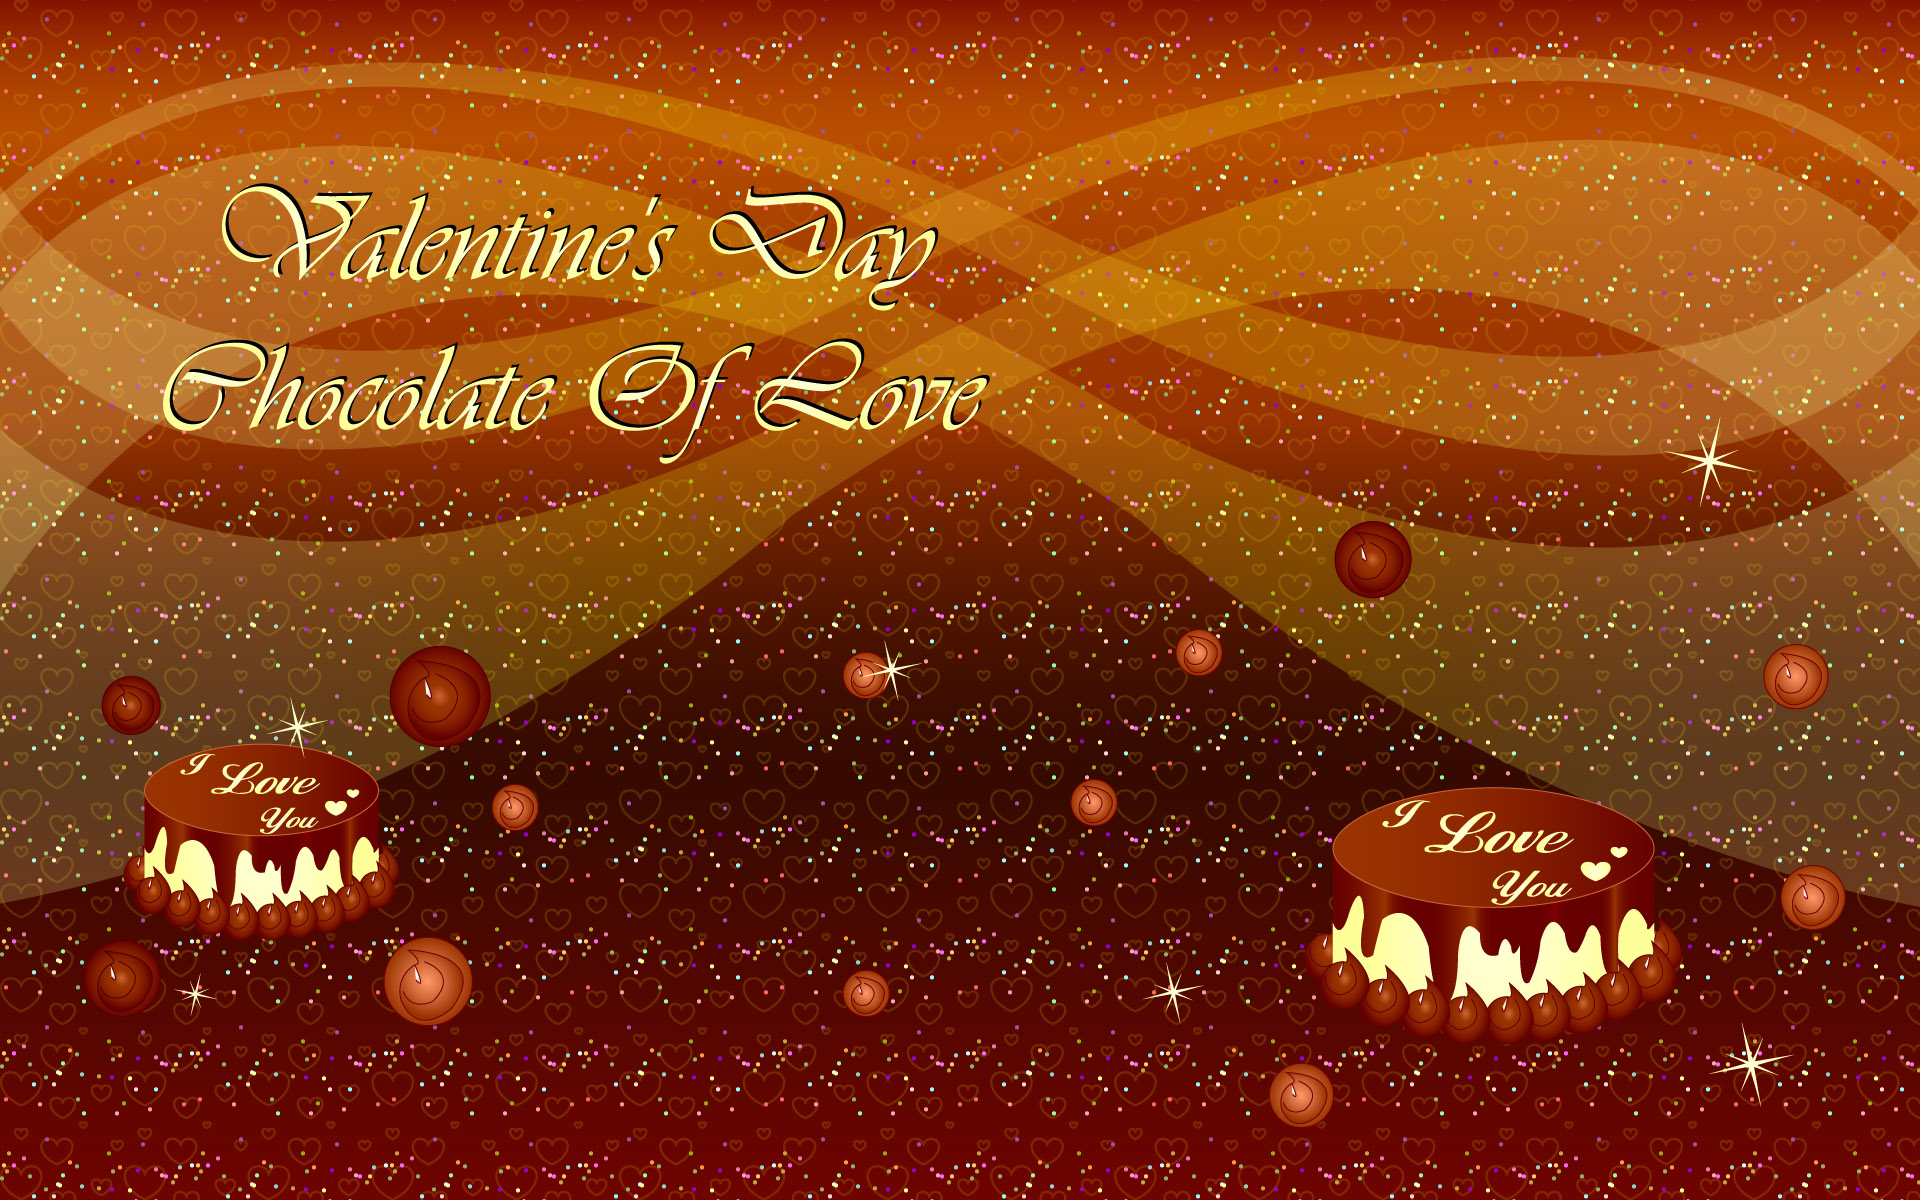 Valentine's day - Chocolate of love